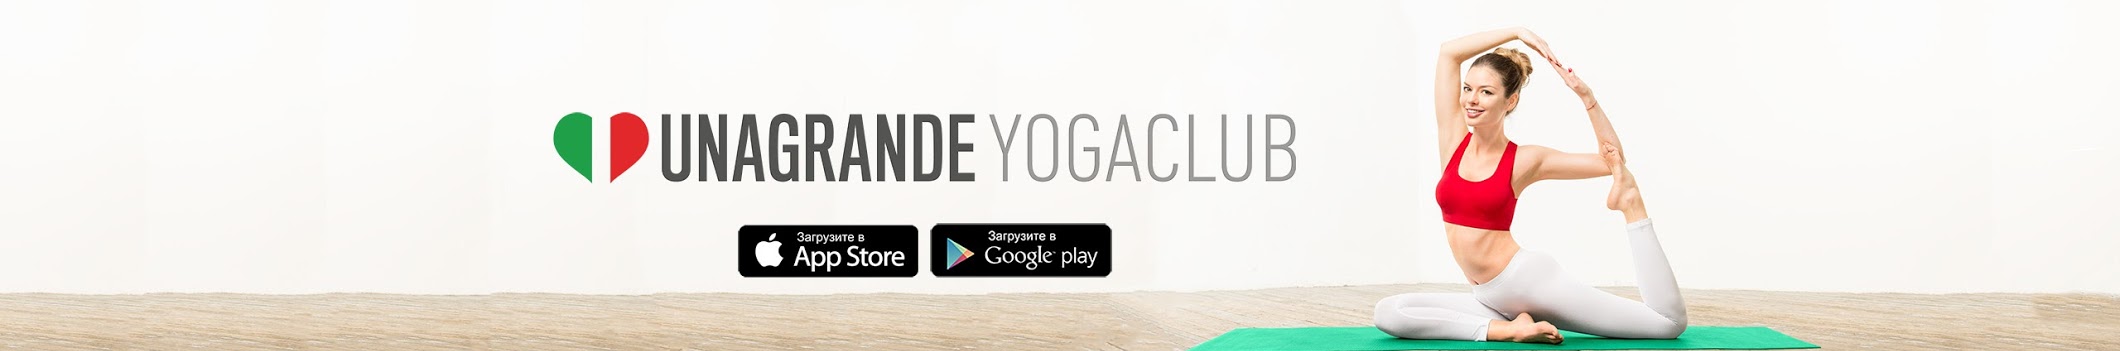 Unagrande YogaClub